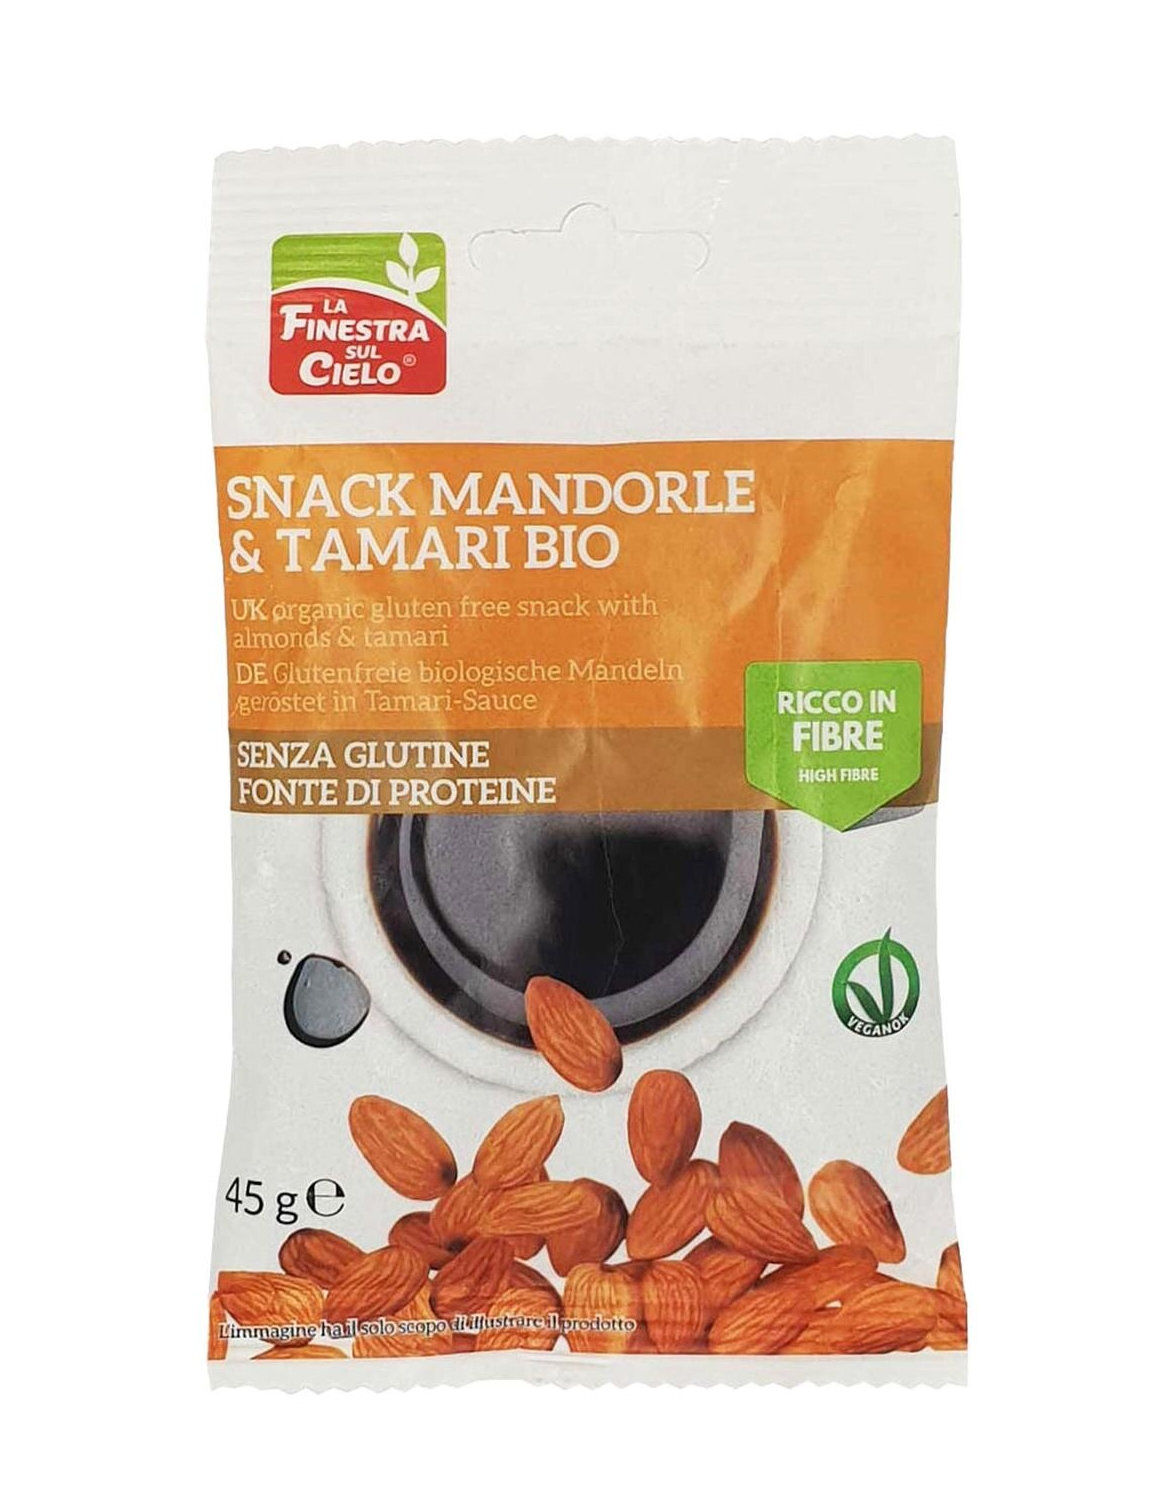 LA FINESTRA SUL CIELO Snack Mandorle & Tamari Bio 45 Grammi